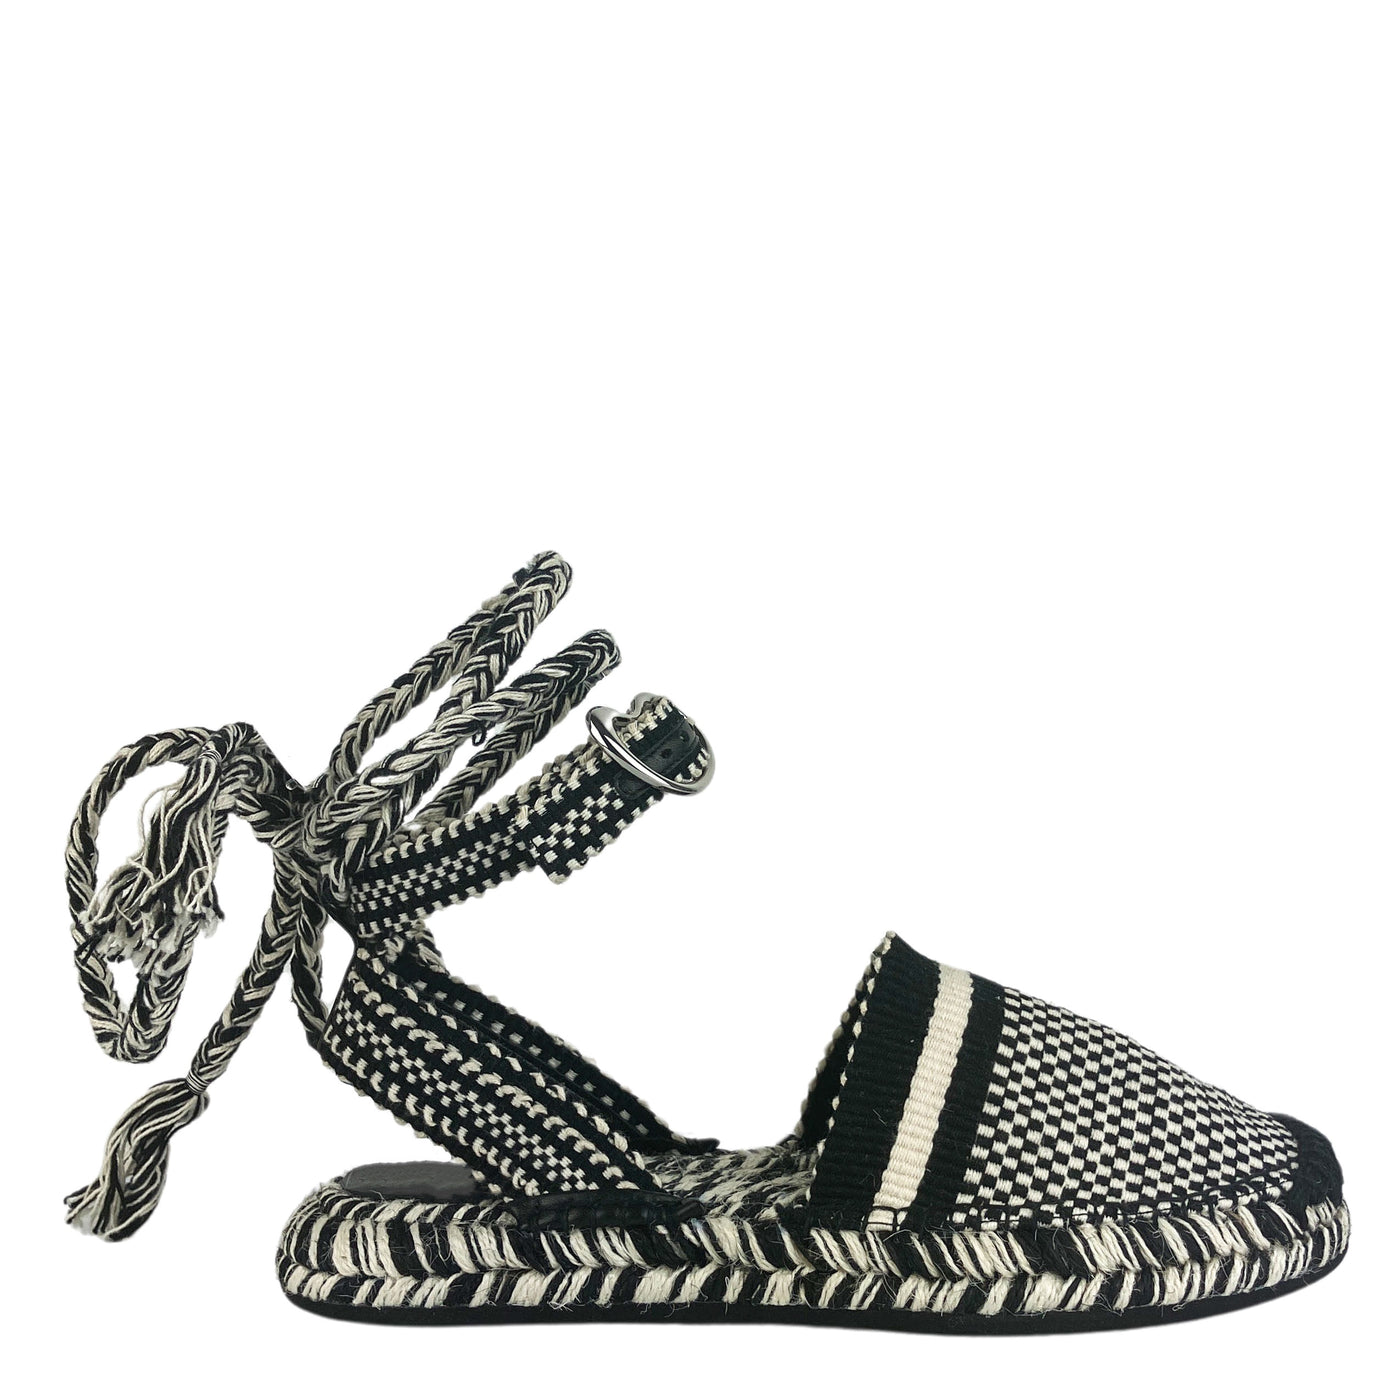 Amambaih Amparo Sandals in Cream and Black - Discounts on Amambaih at UAL